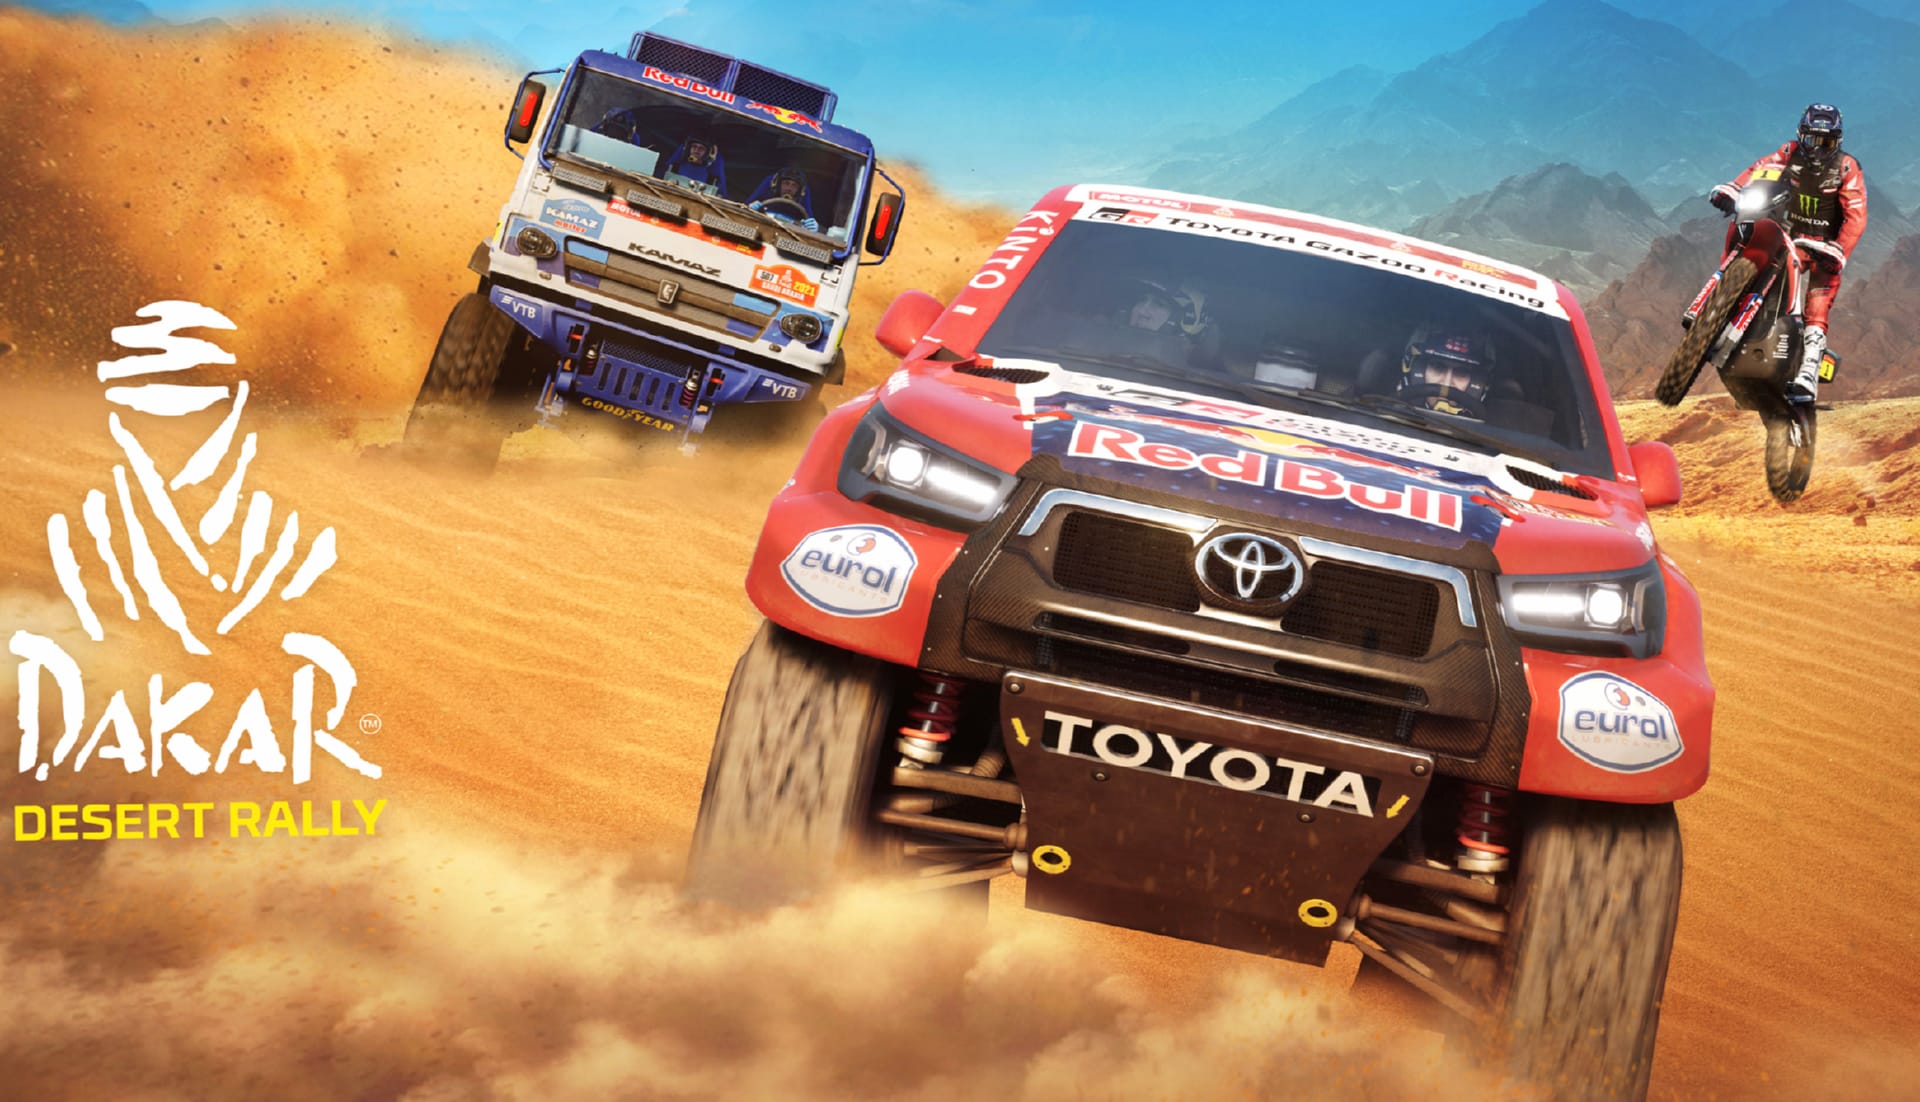 Dakar Desert Rally at 1600 x 1200 size wallpapers HD quality